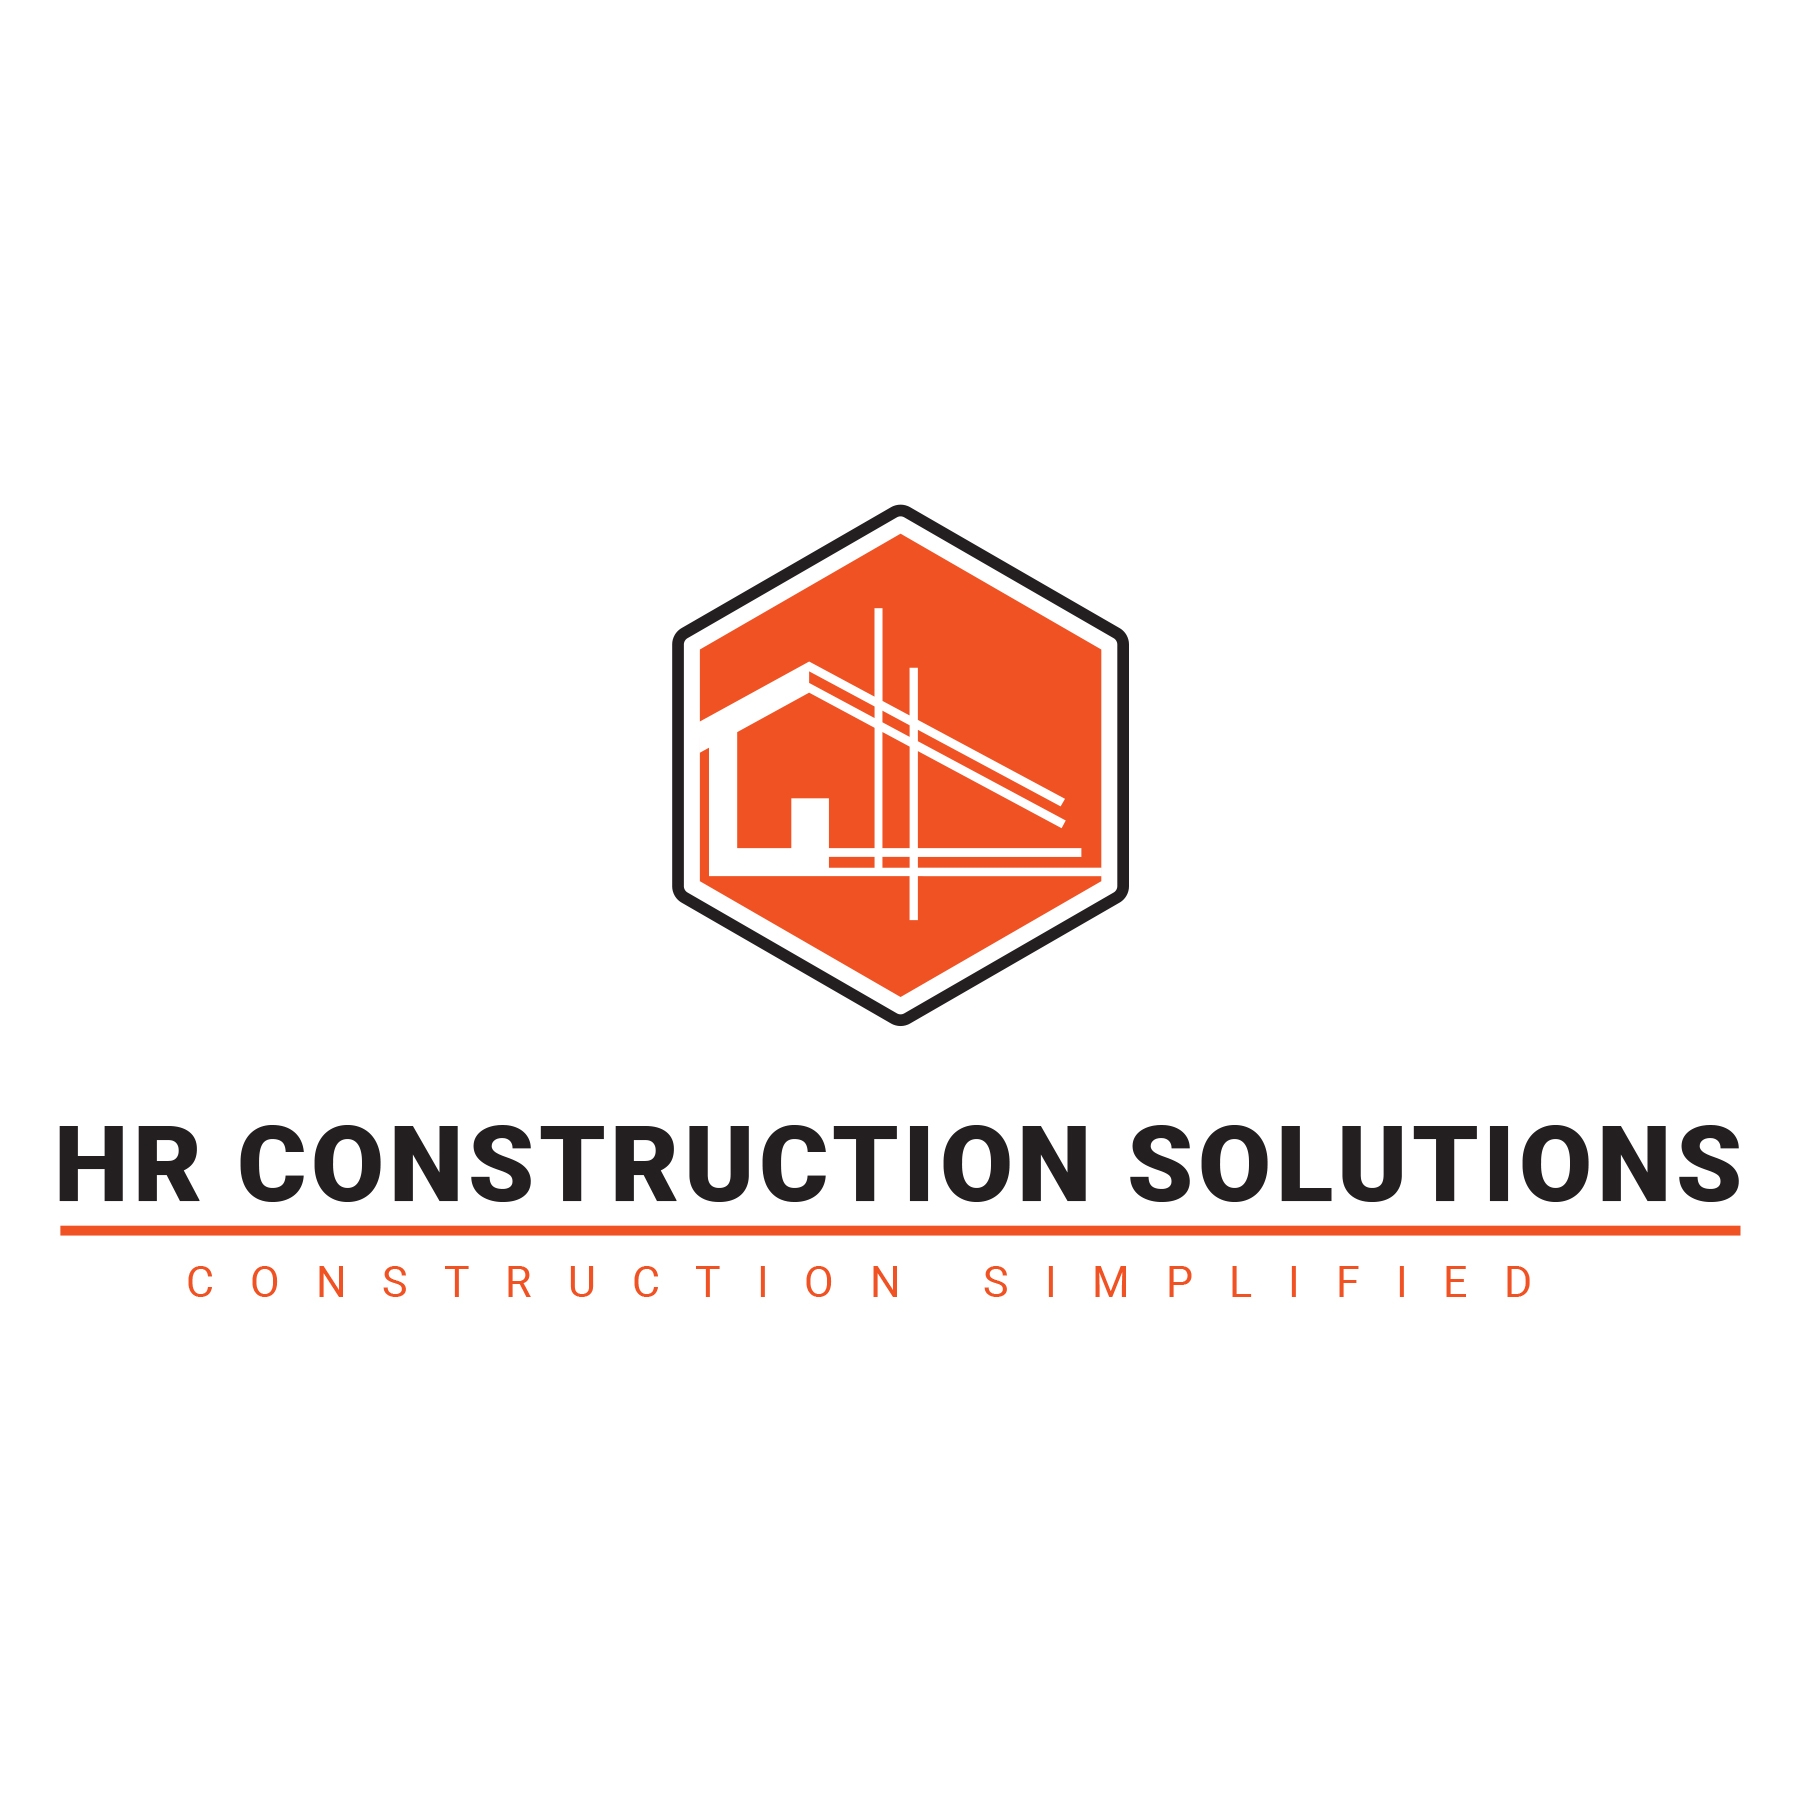 HR Construction Solutions|Legal Services|Professional Services